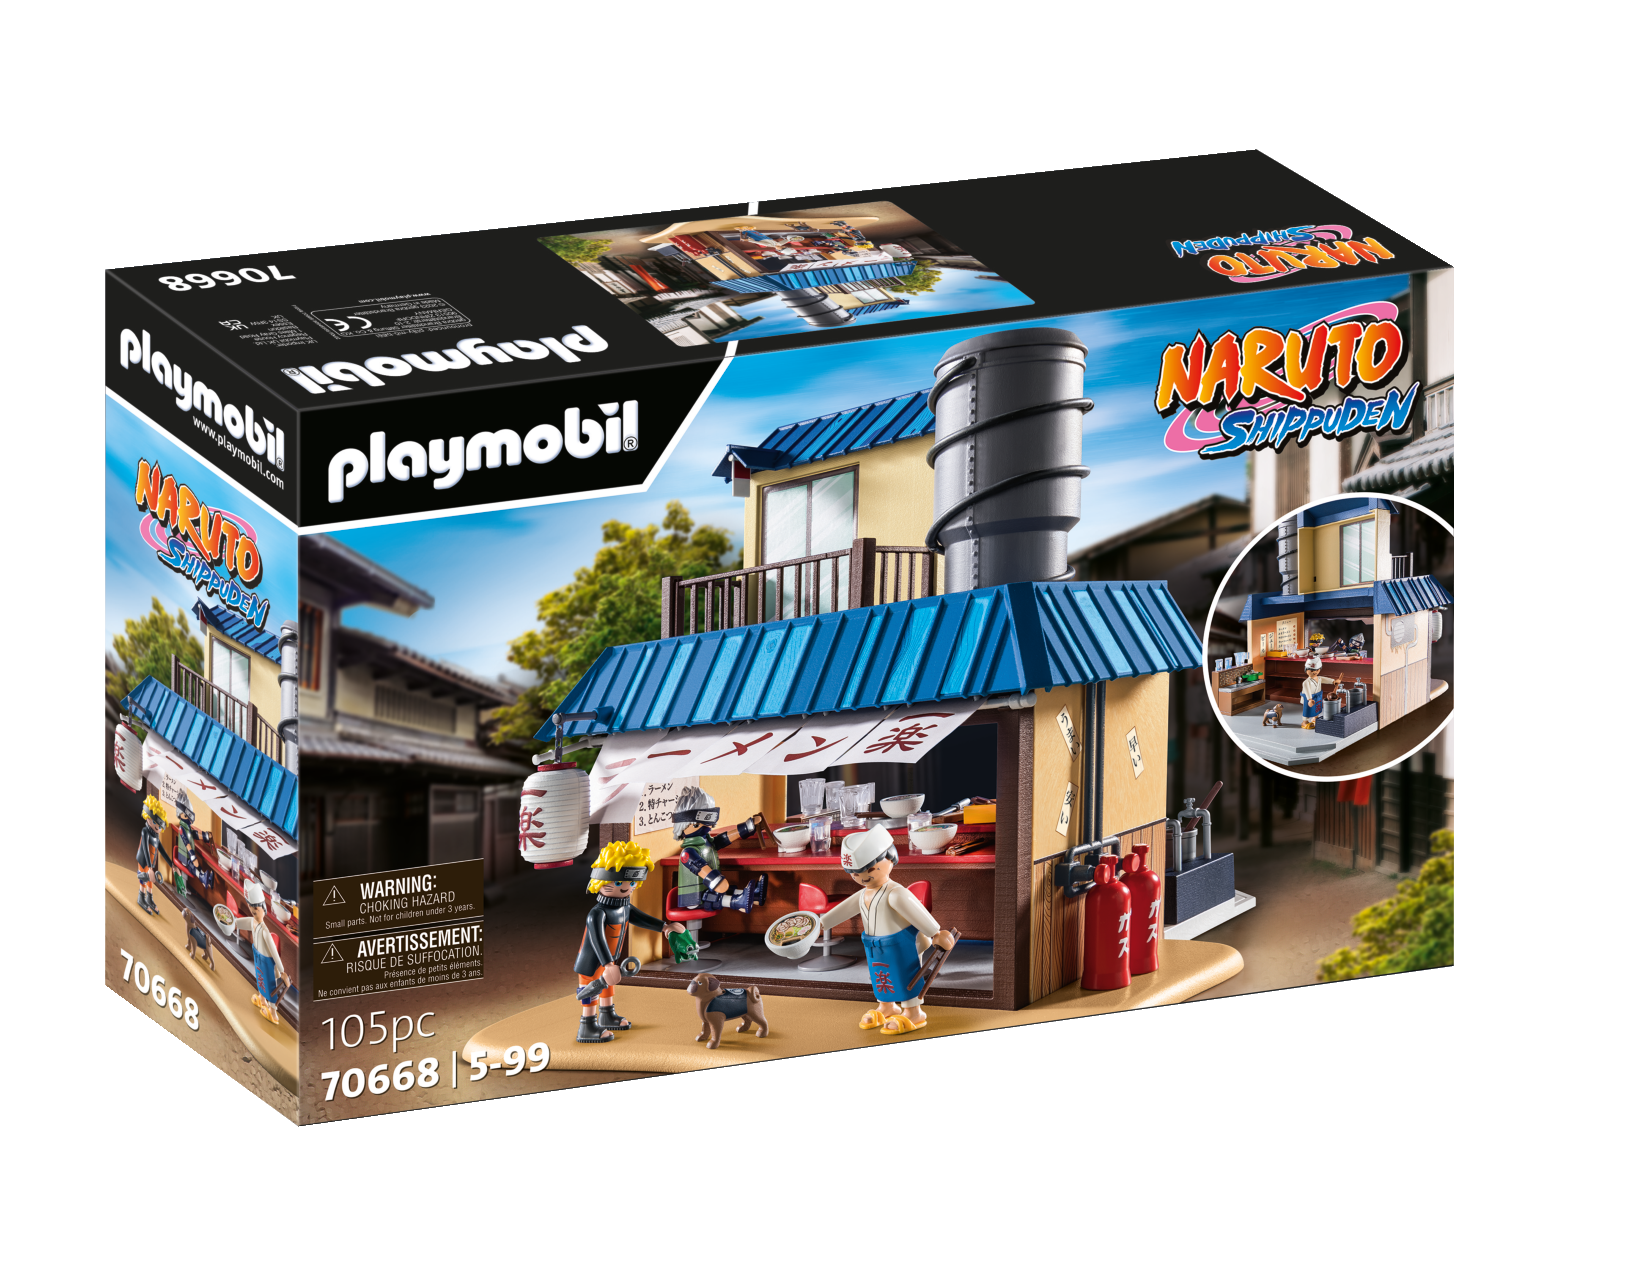 Playmobil 70668 naruto shippuden negozio di ramen ichiraku per tutti gli appasionati di manga e anime - Playmobil